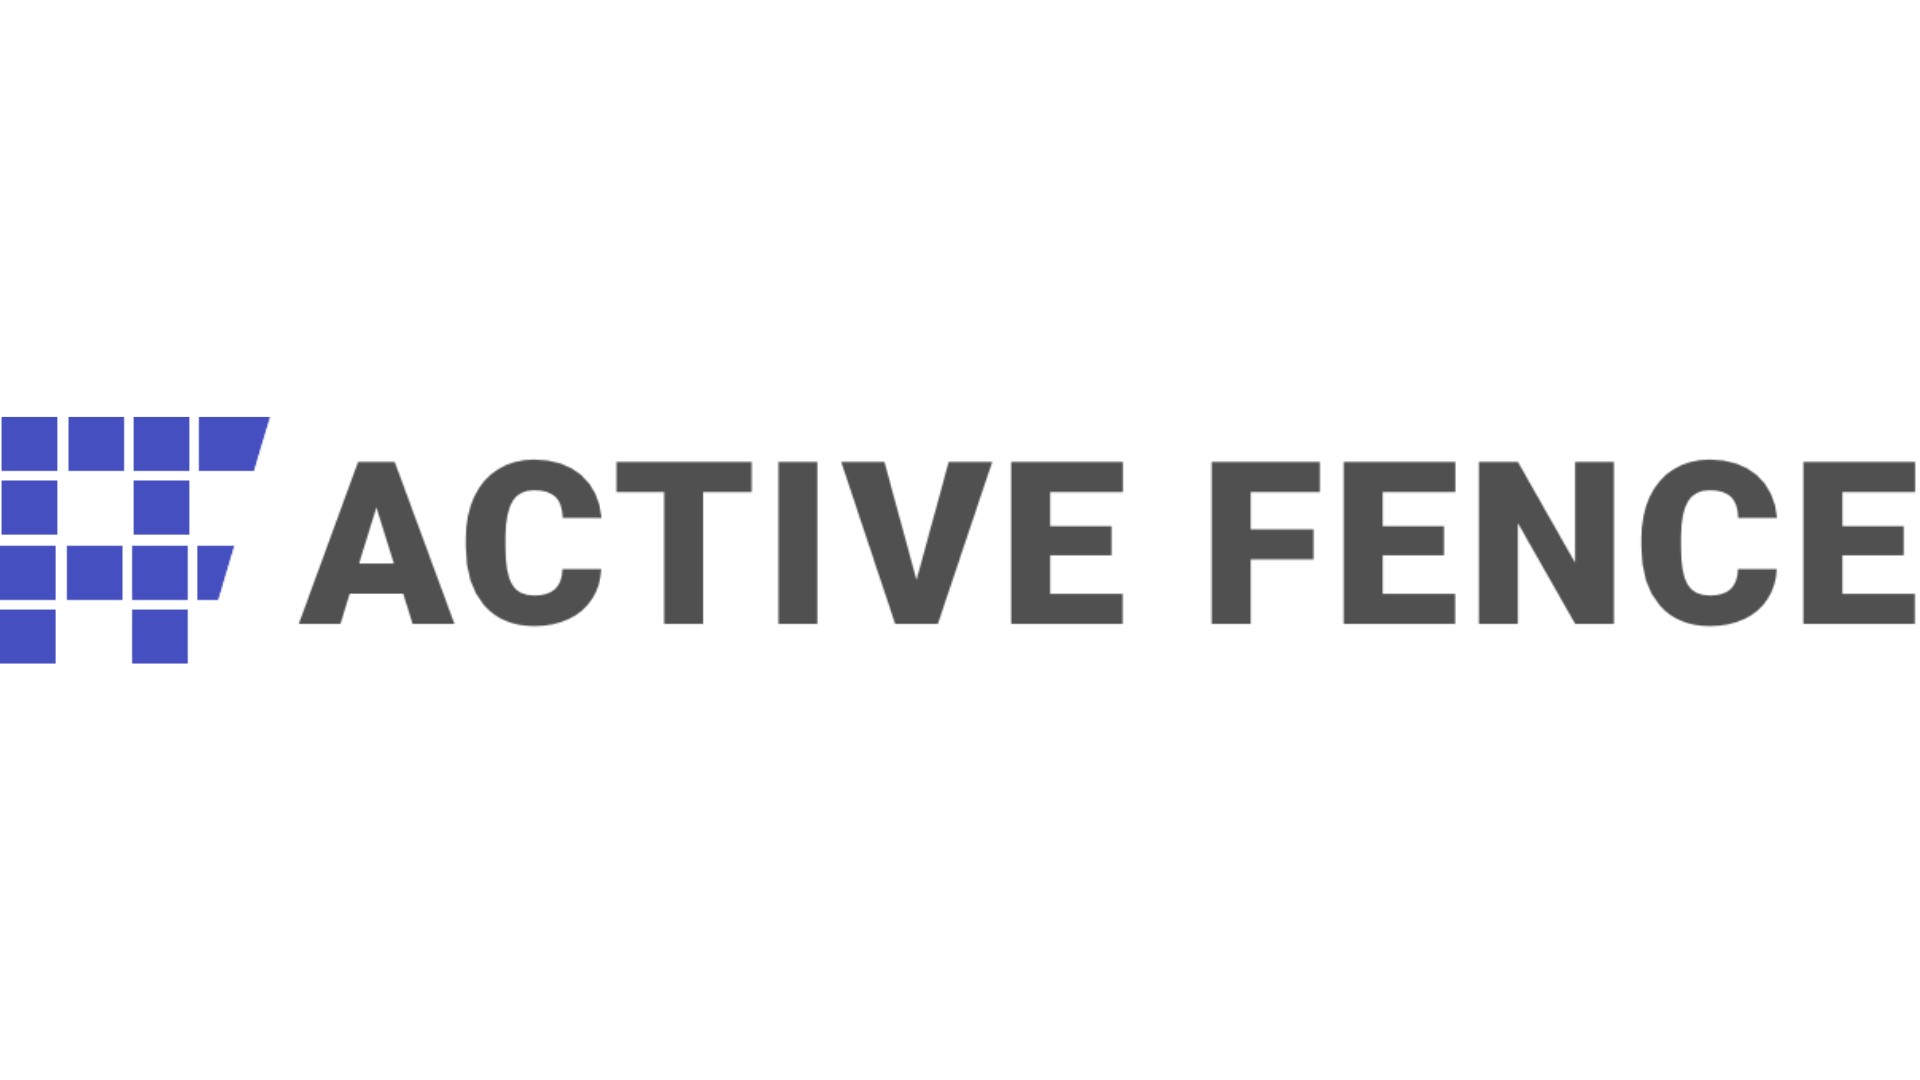 ActiveFence logo